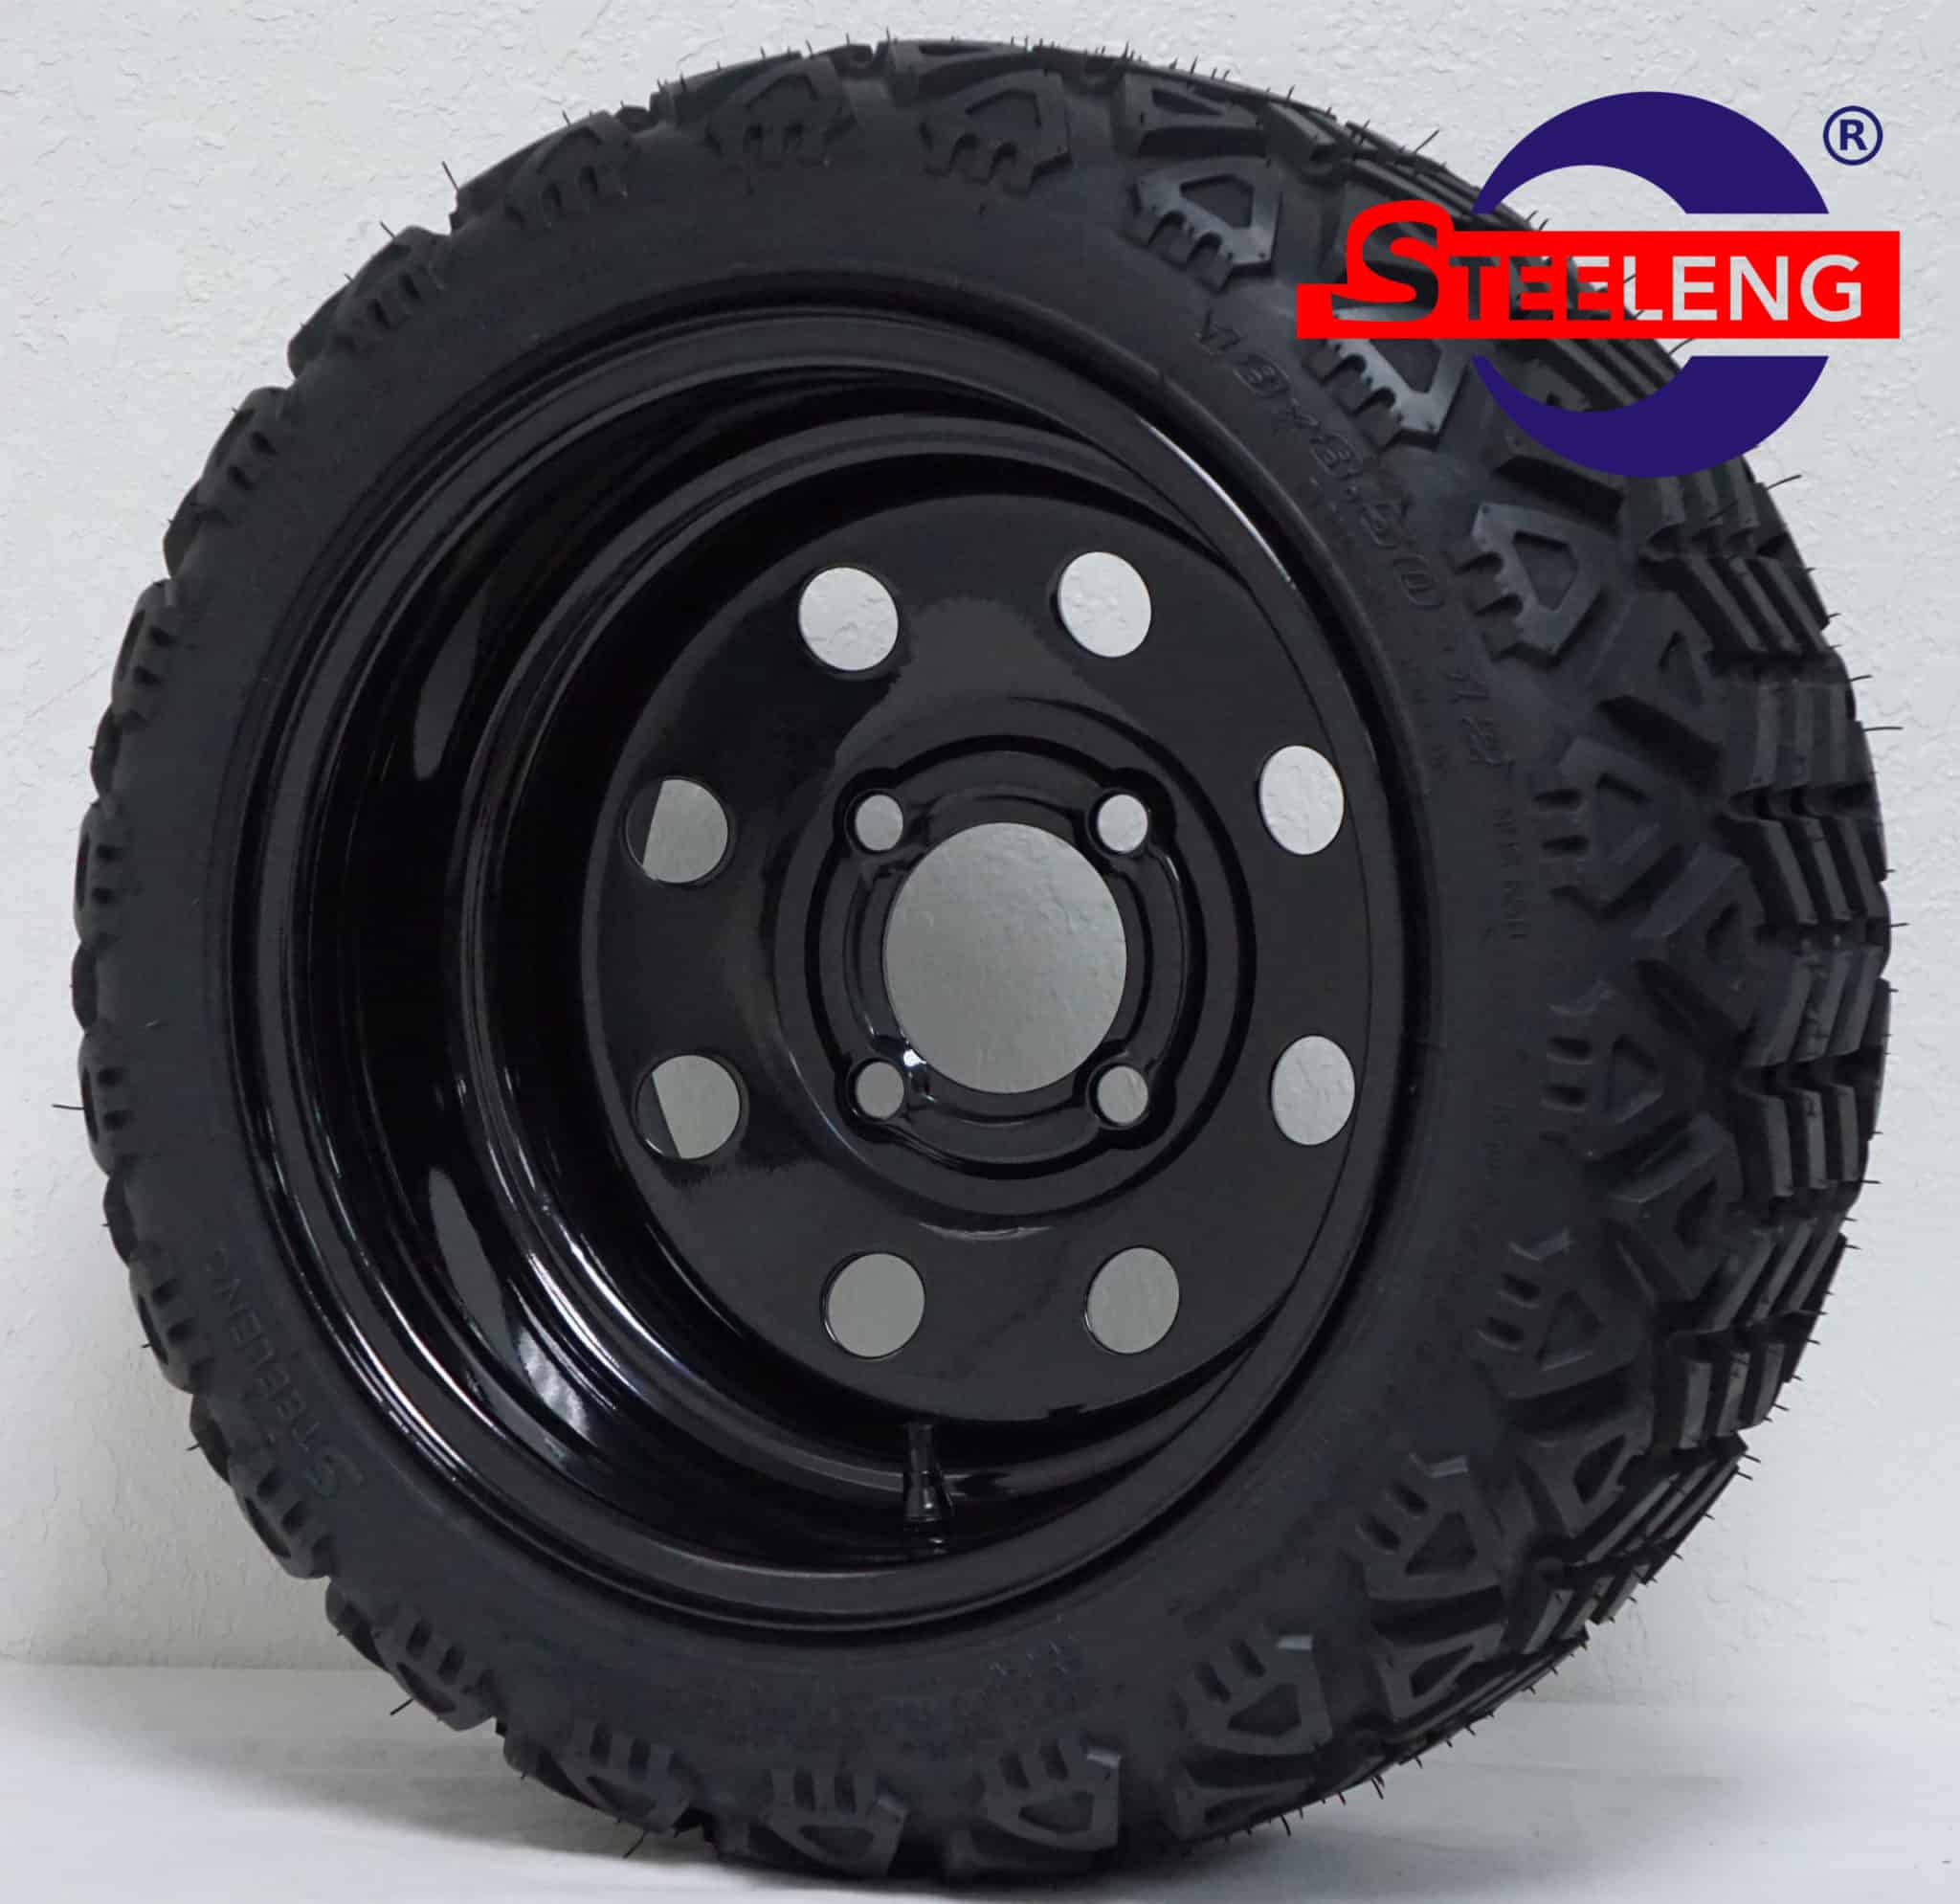 12" x 7" Steel Wheel 8 Holes Black & 18" x 8.5" -12"All Terrain Tire DOT Approved Set of 4